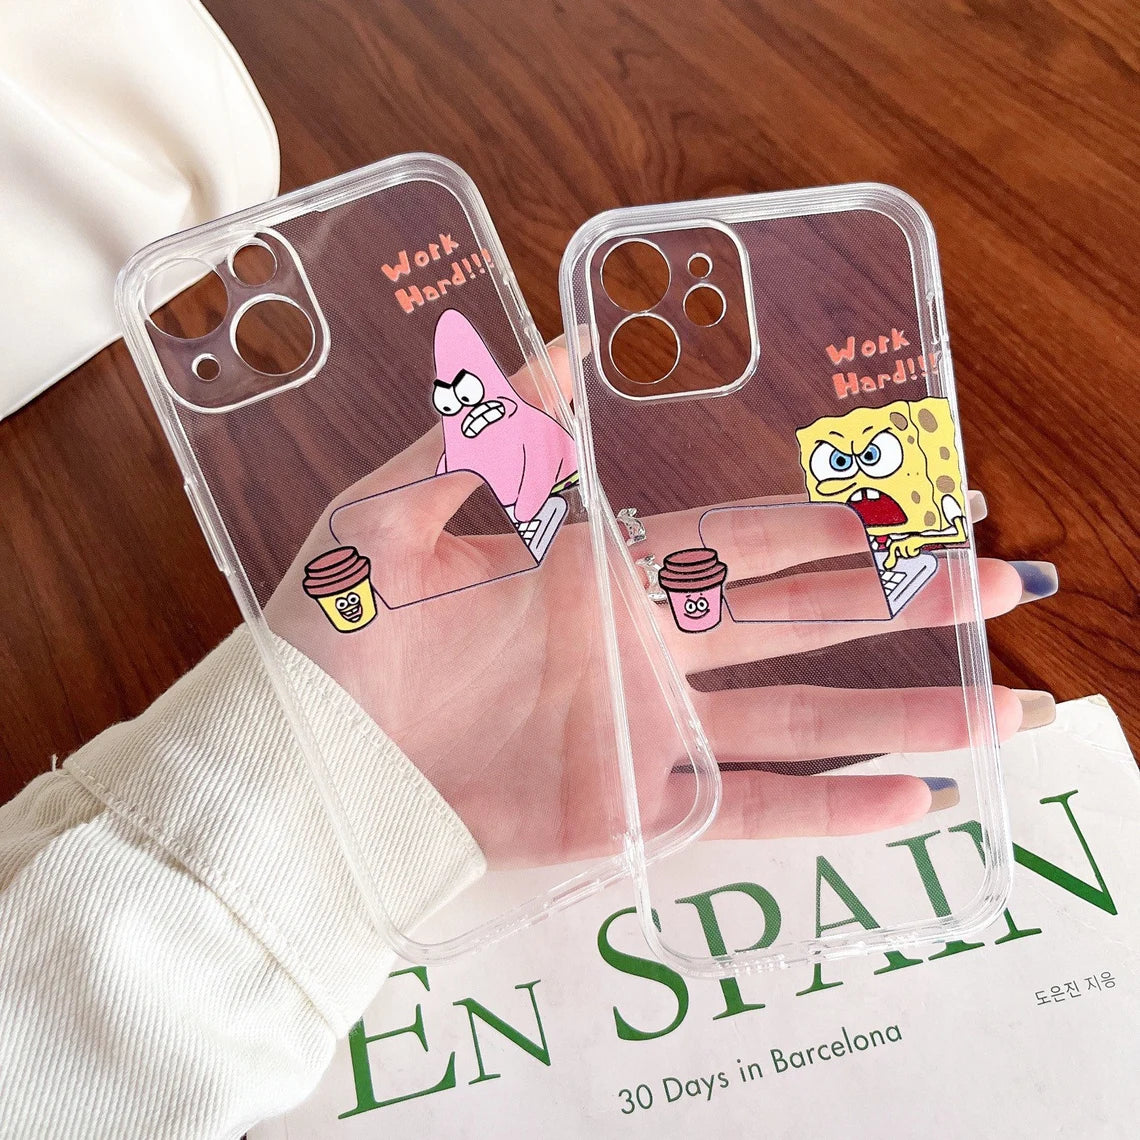 Cartoon Design Pink Yellow Sea Monster Sponge Star Working iPhone Case 6 7 8 PLUS SE2 XS XR X 11 12 13 14 15 Pro Promax 12mini 13mini